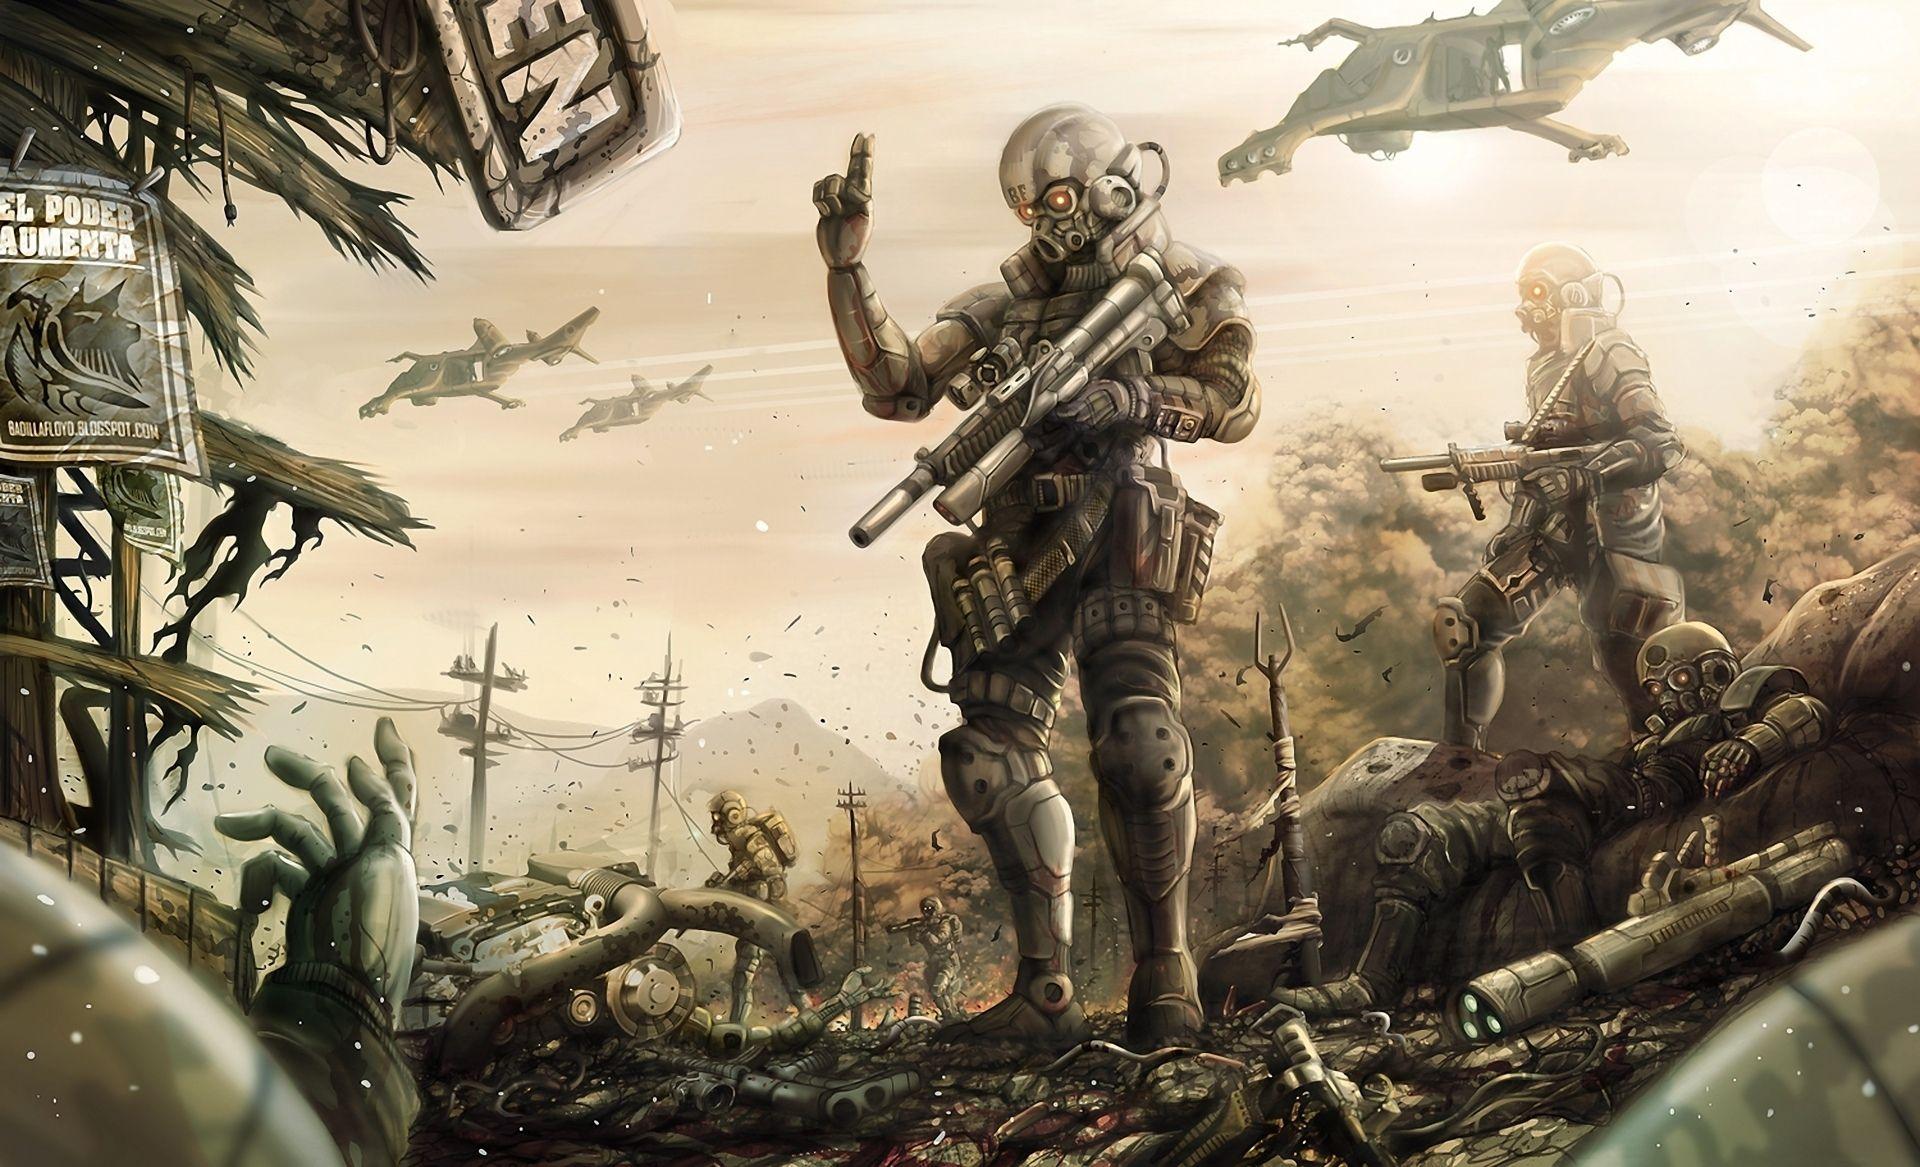 Sci Fi Battle Wallpaper For iPhone #zoD. Sci fi, Science fiction illustration, Sci